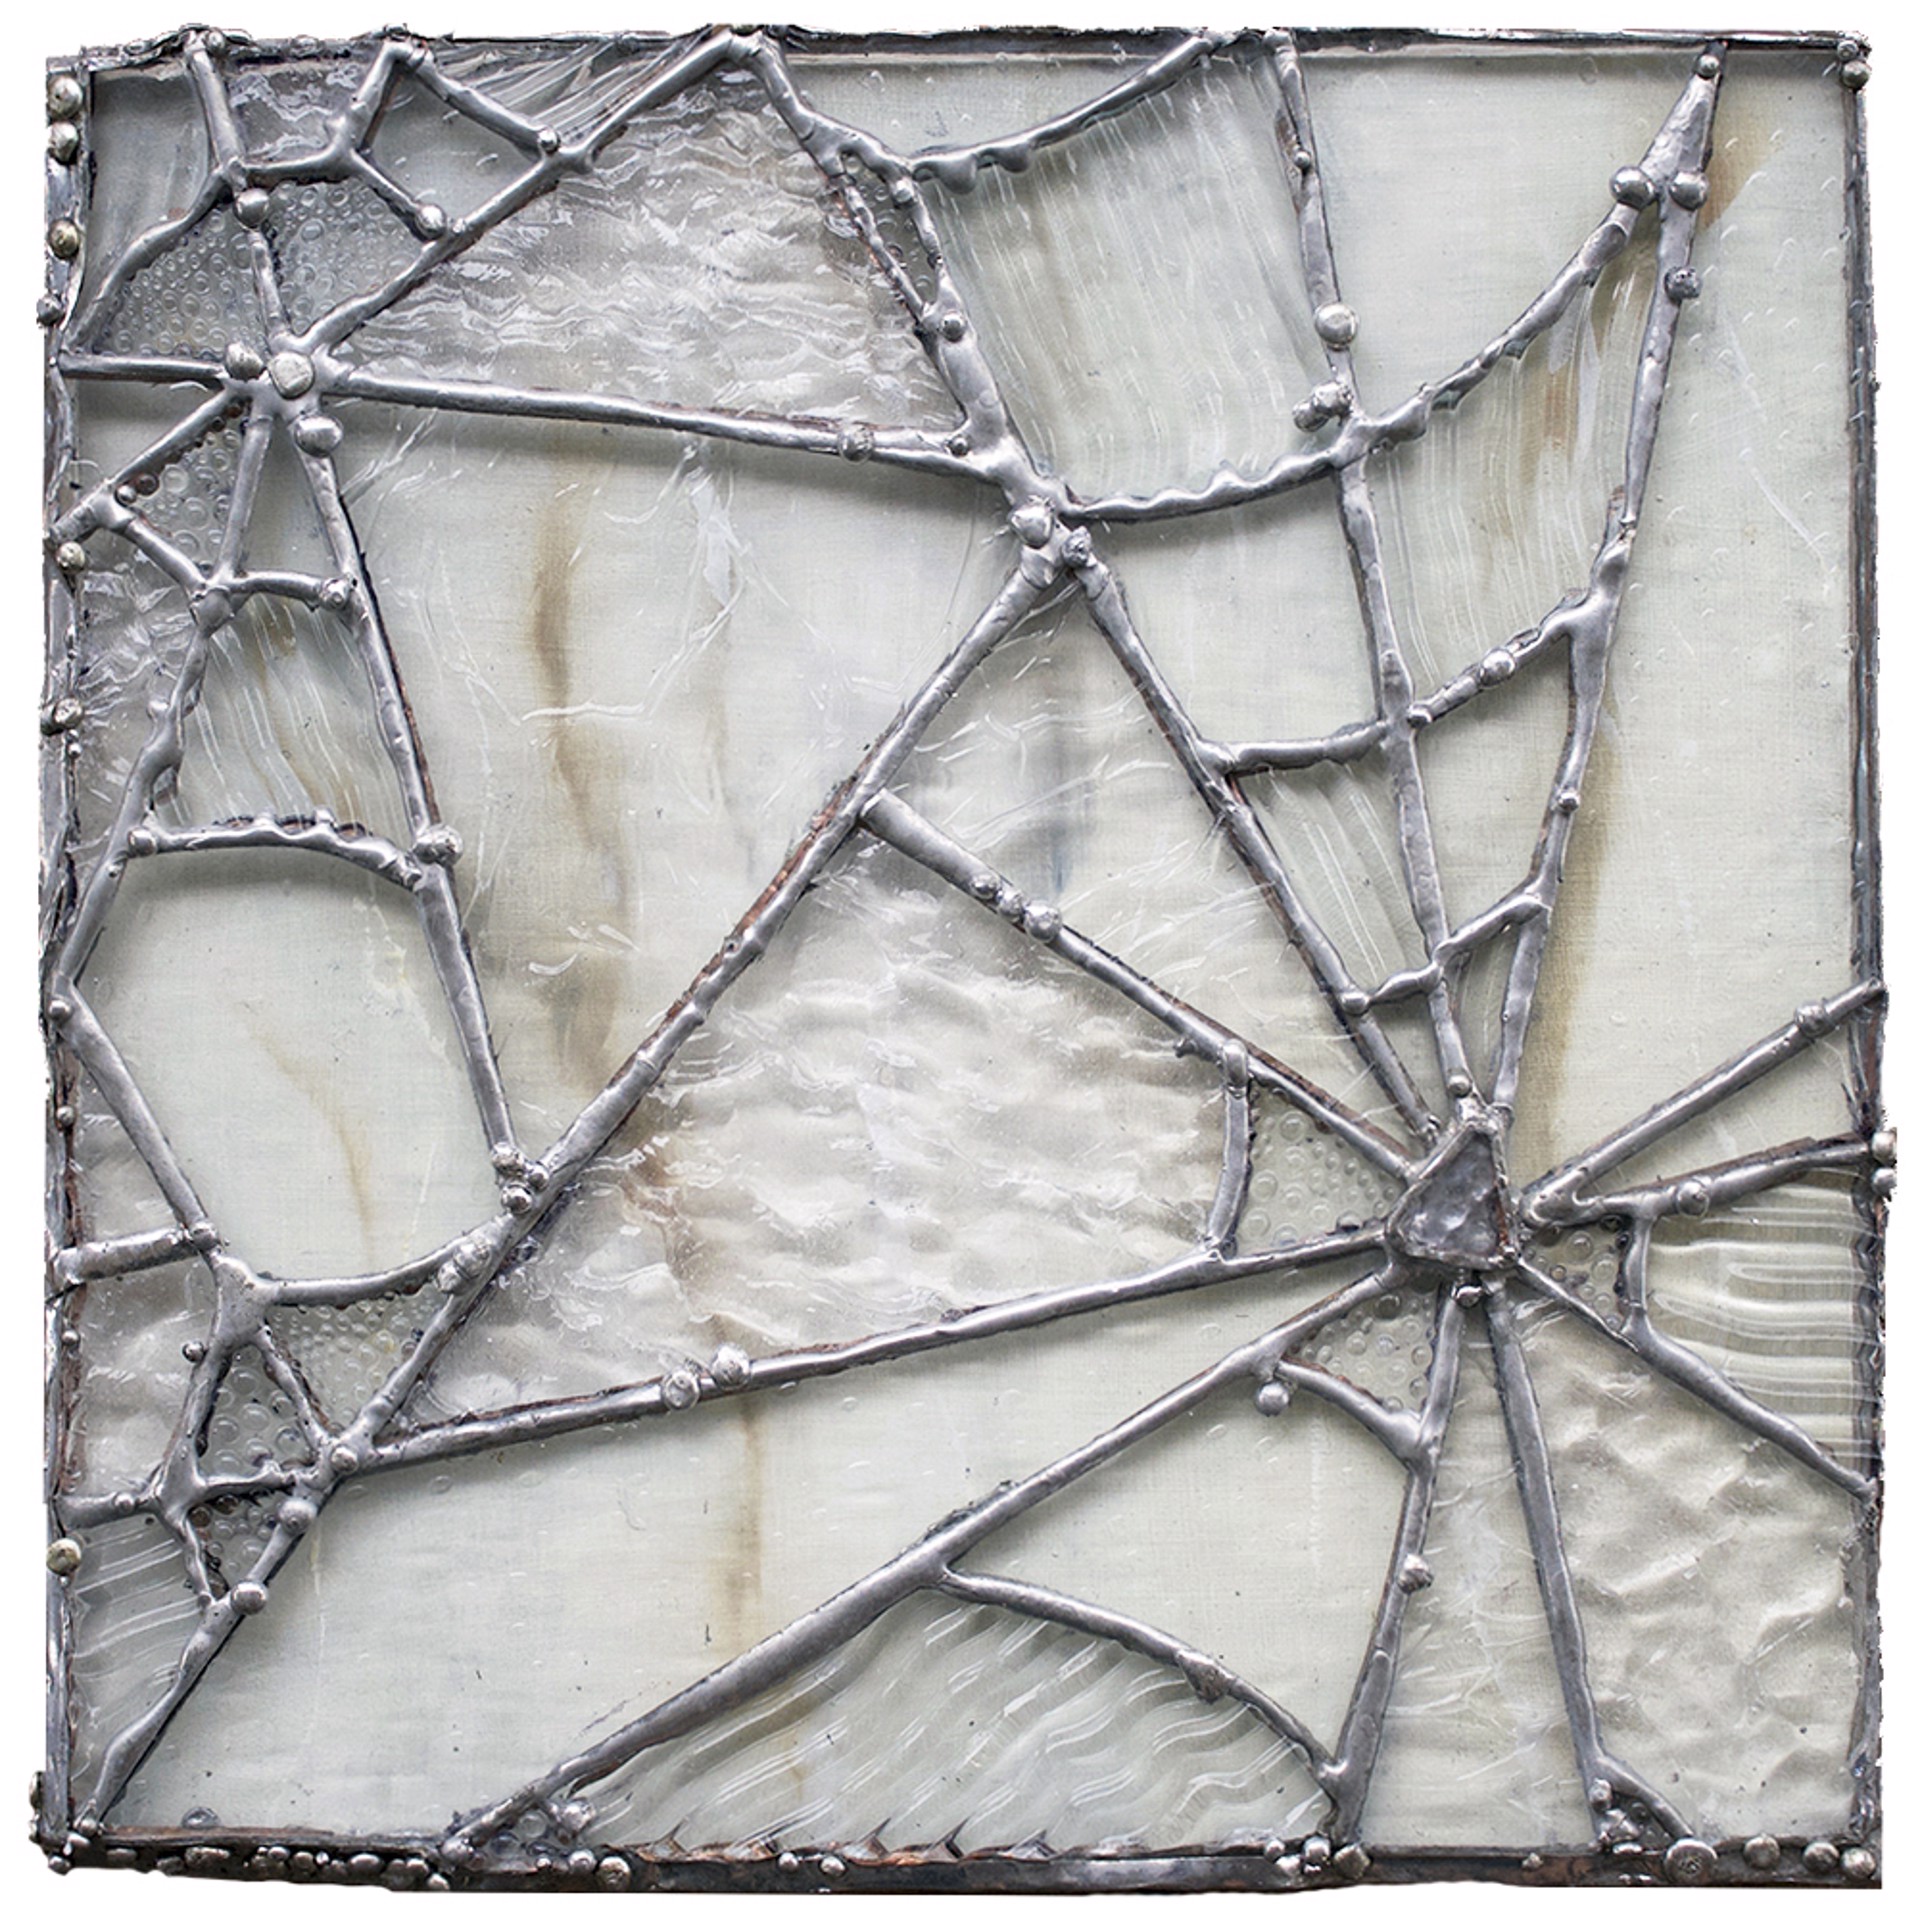 Fragile Webs 1 by Hayden Phelps